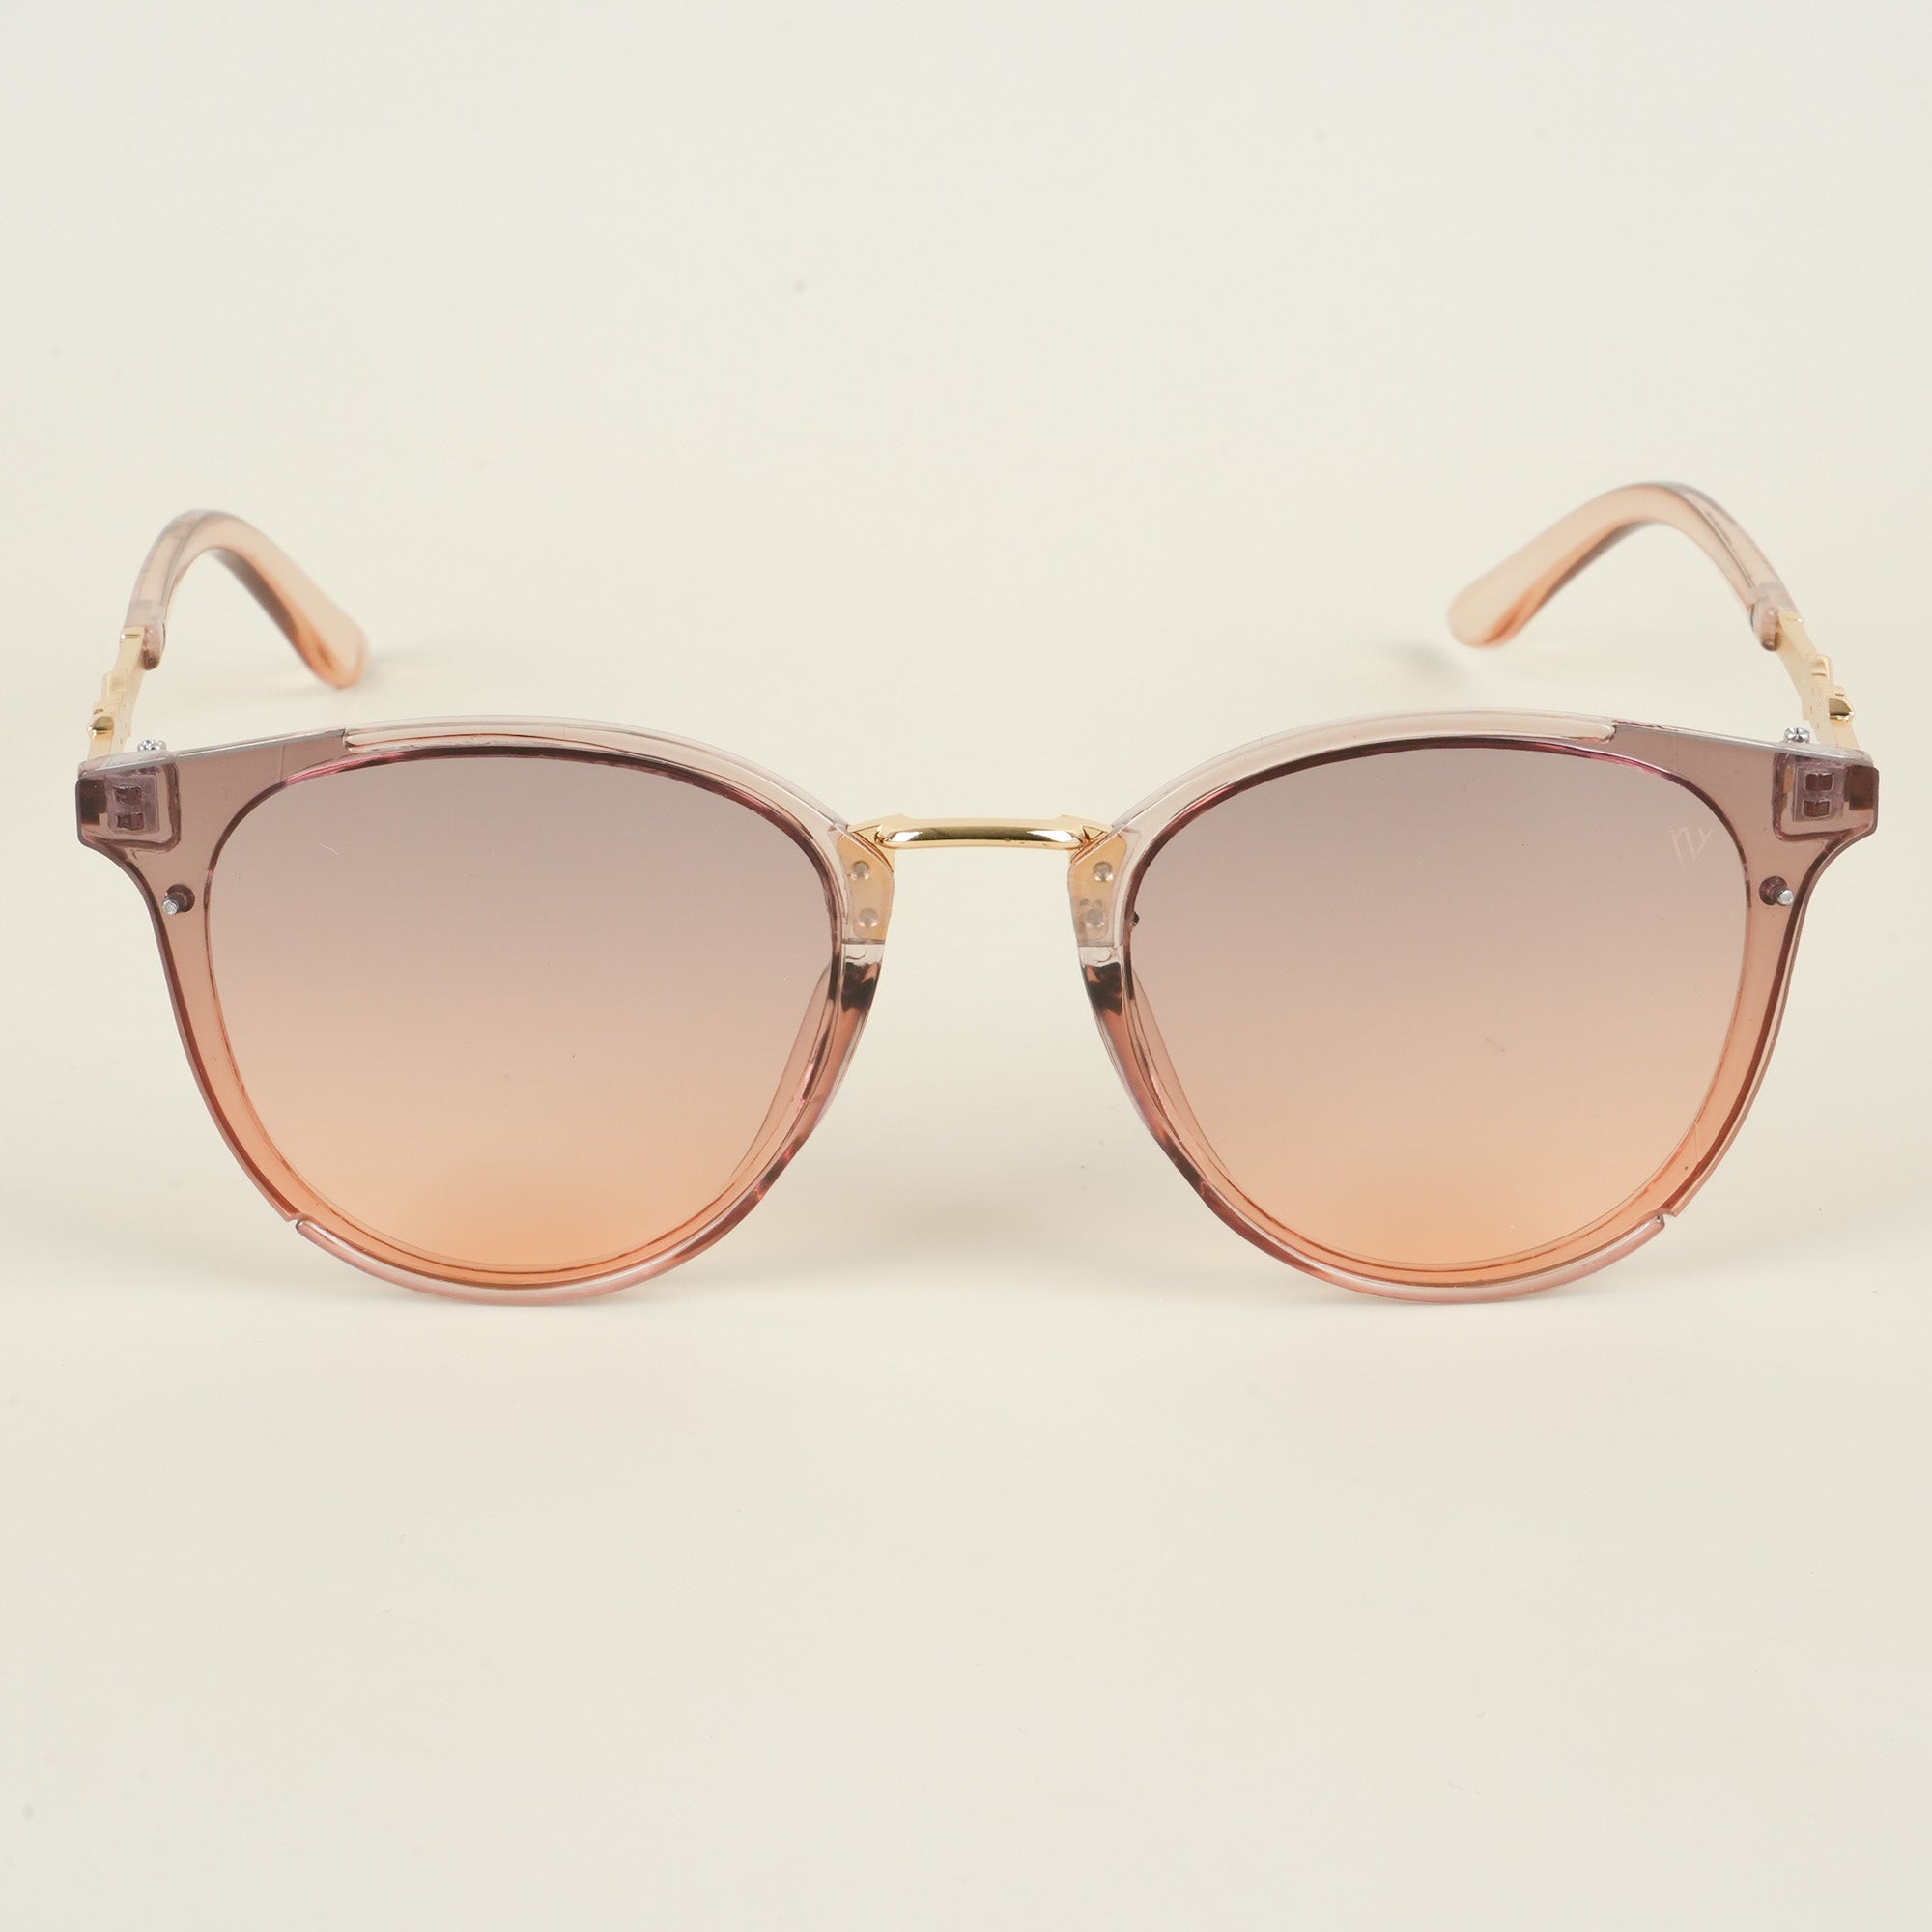 Voyage Cateye Sunglasses for Women (Pink & Grey Lens | Light Pink & Golden Frame - MG3186)